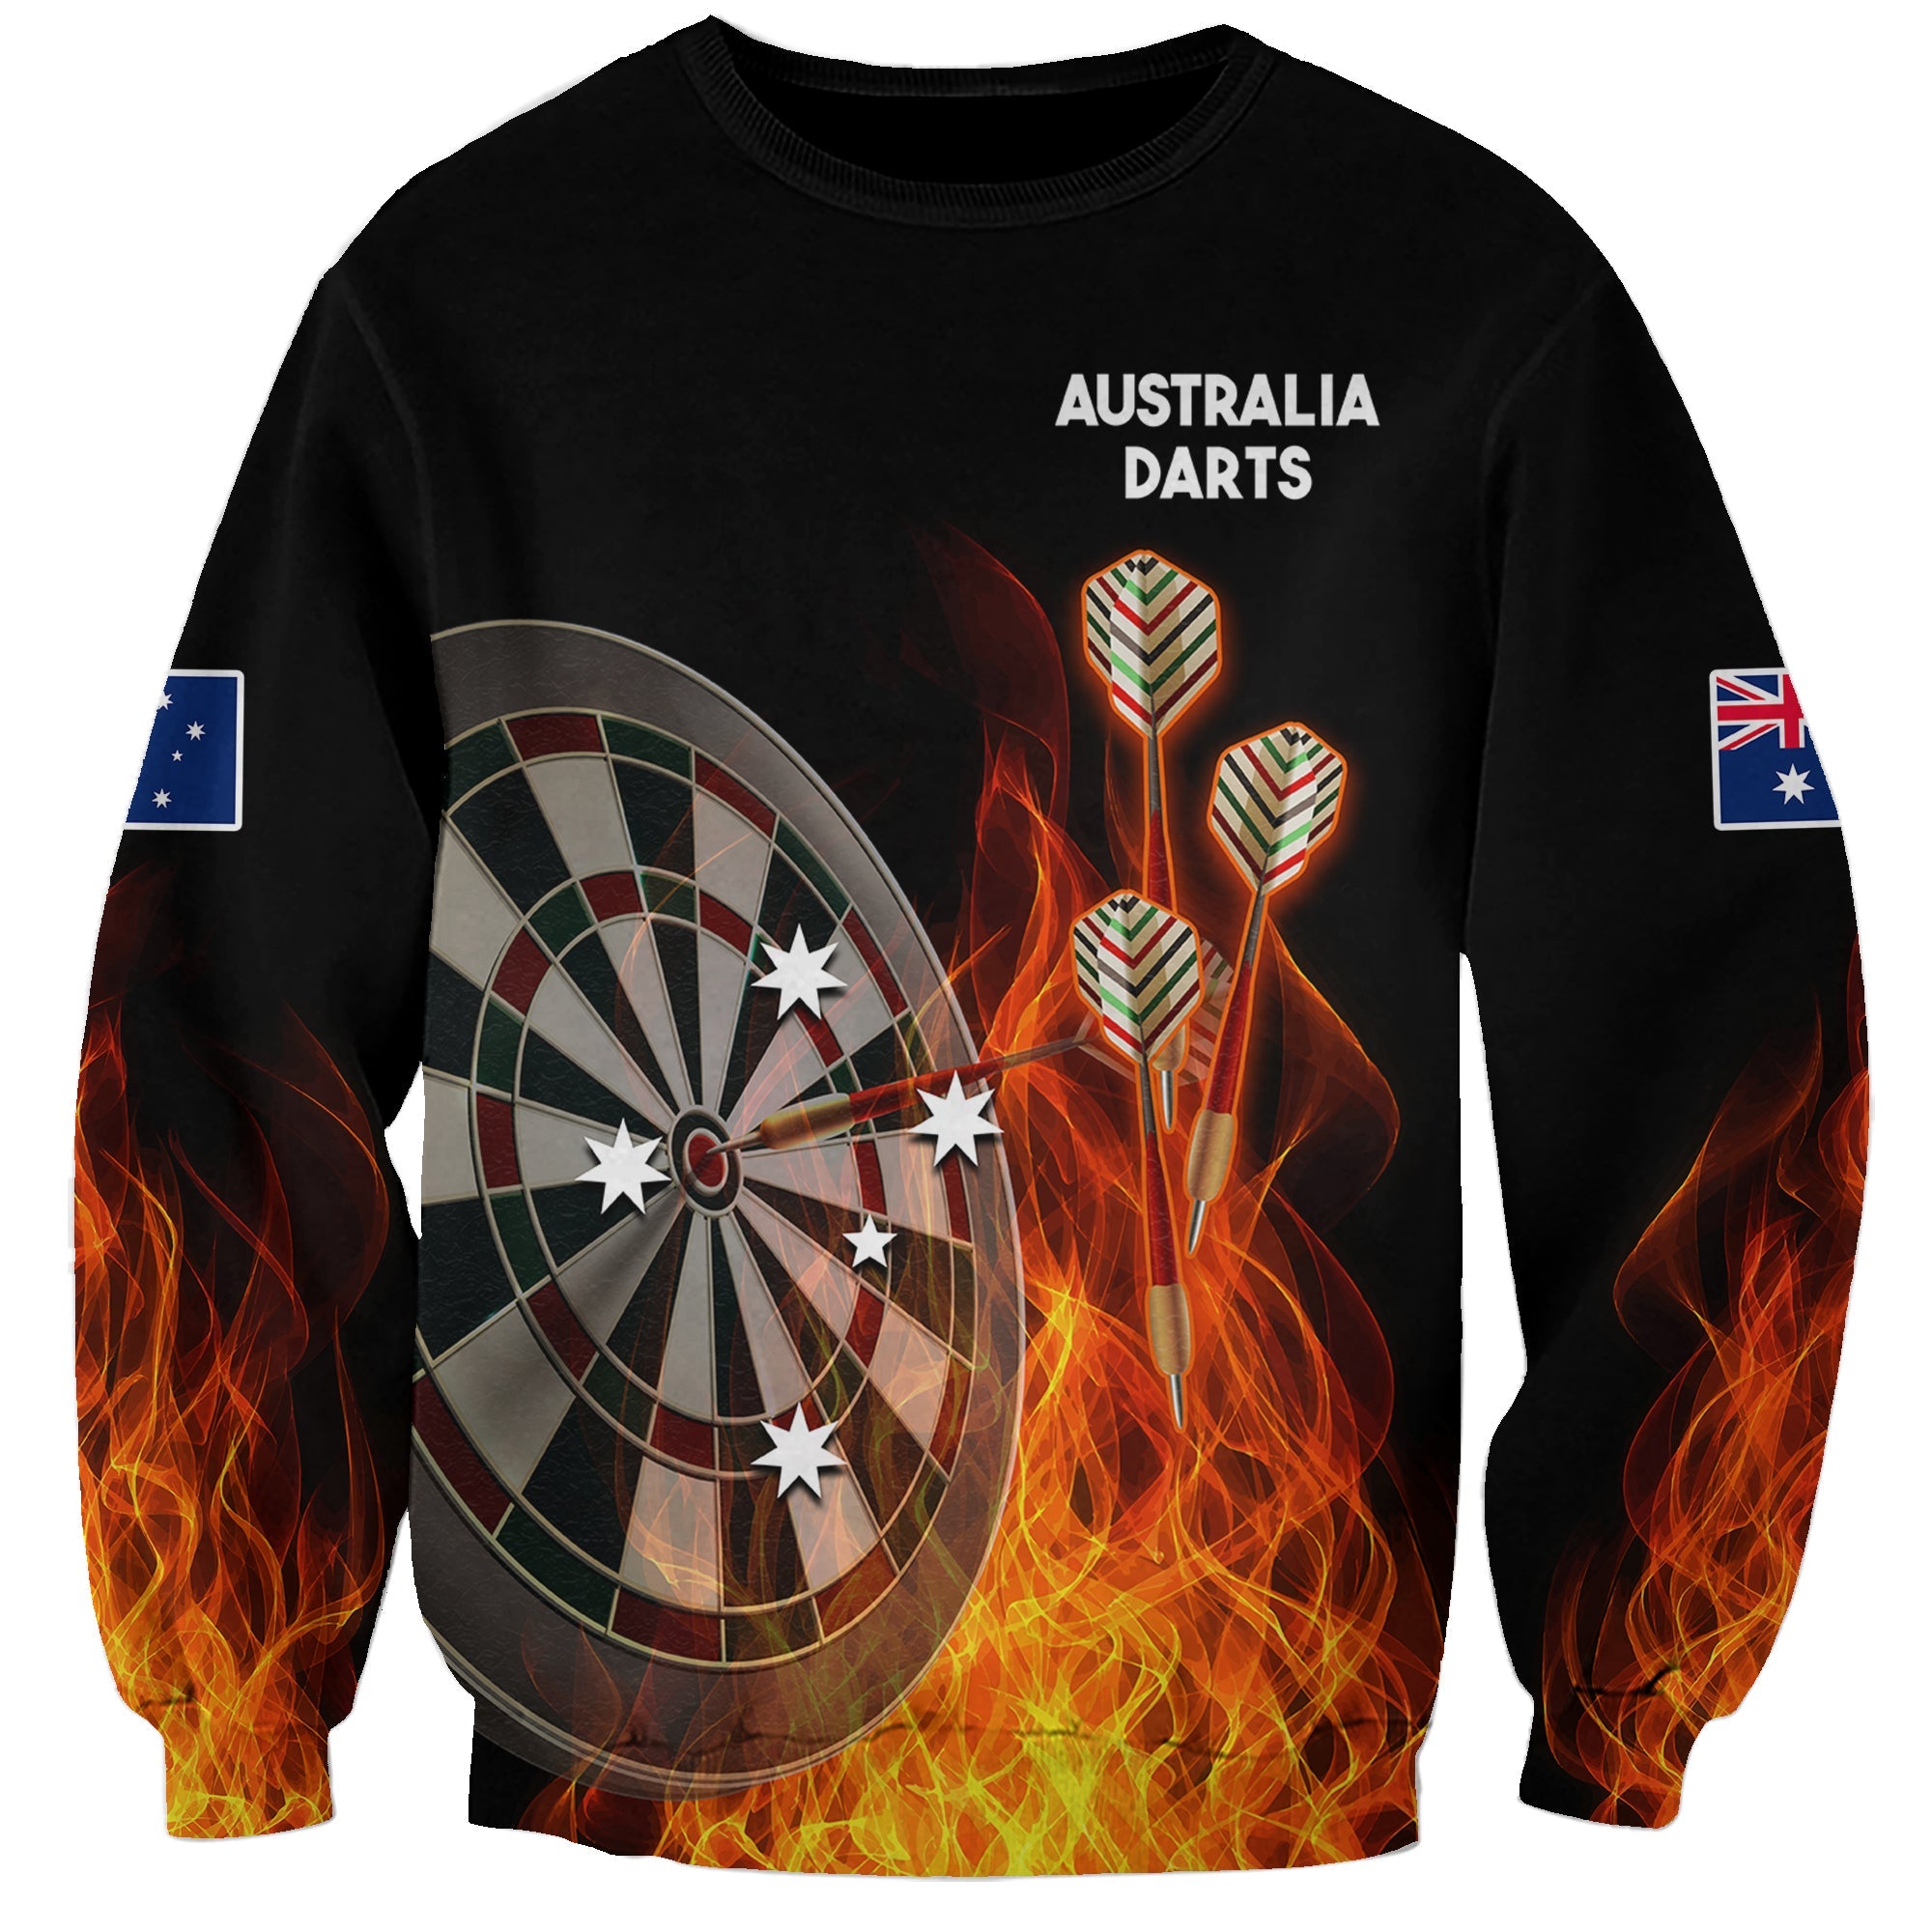 australia-darts-fire-burning-black-style-sweatshirt